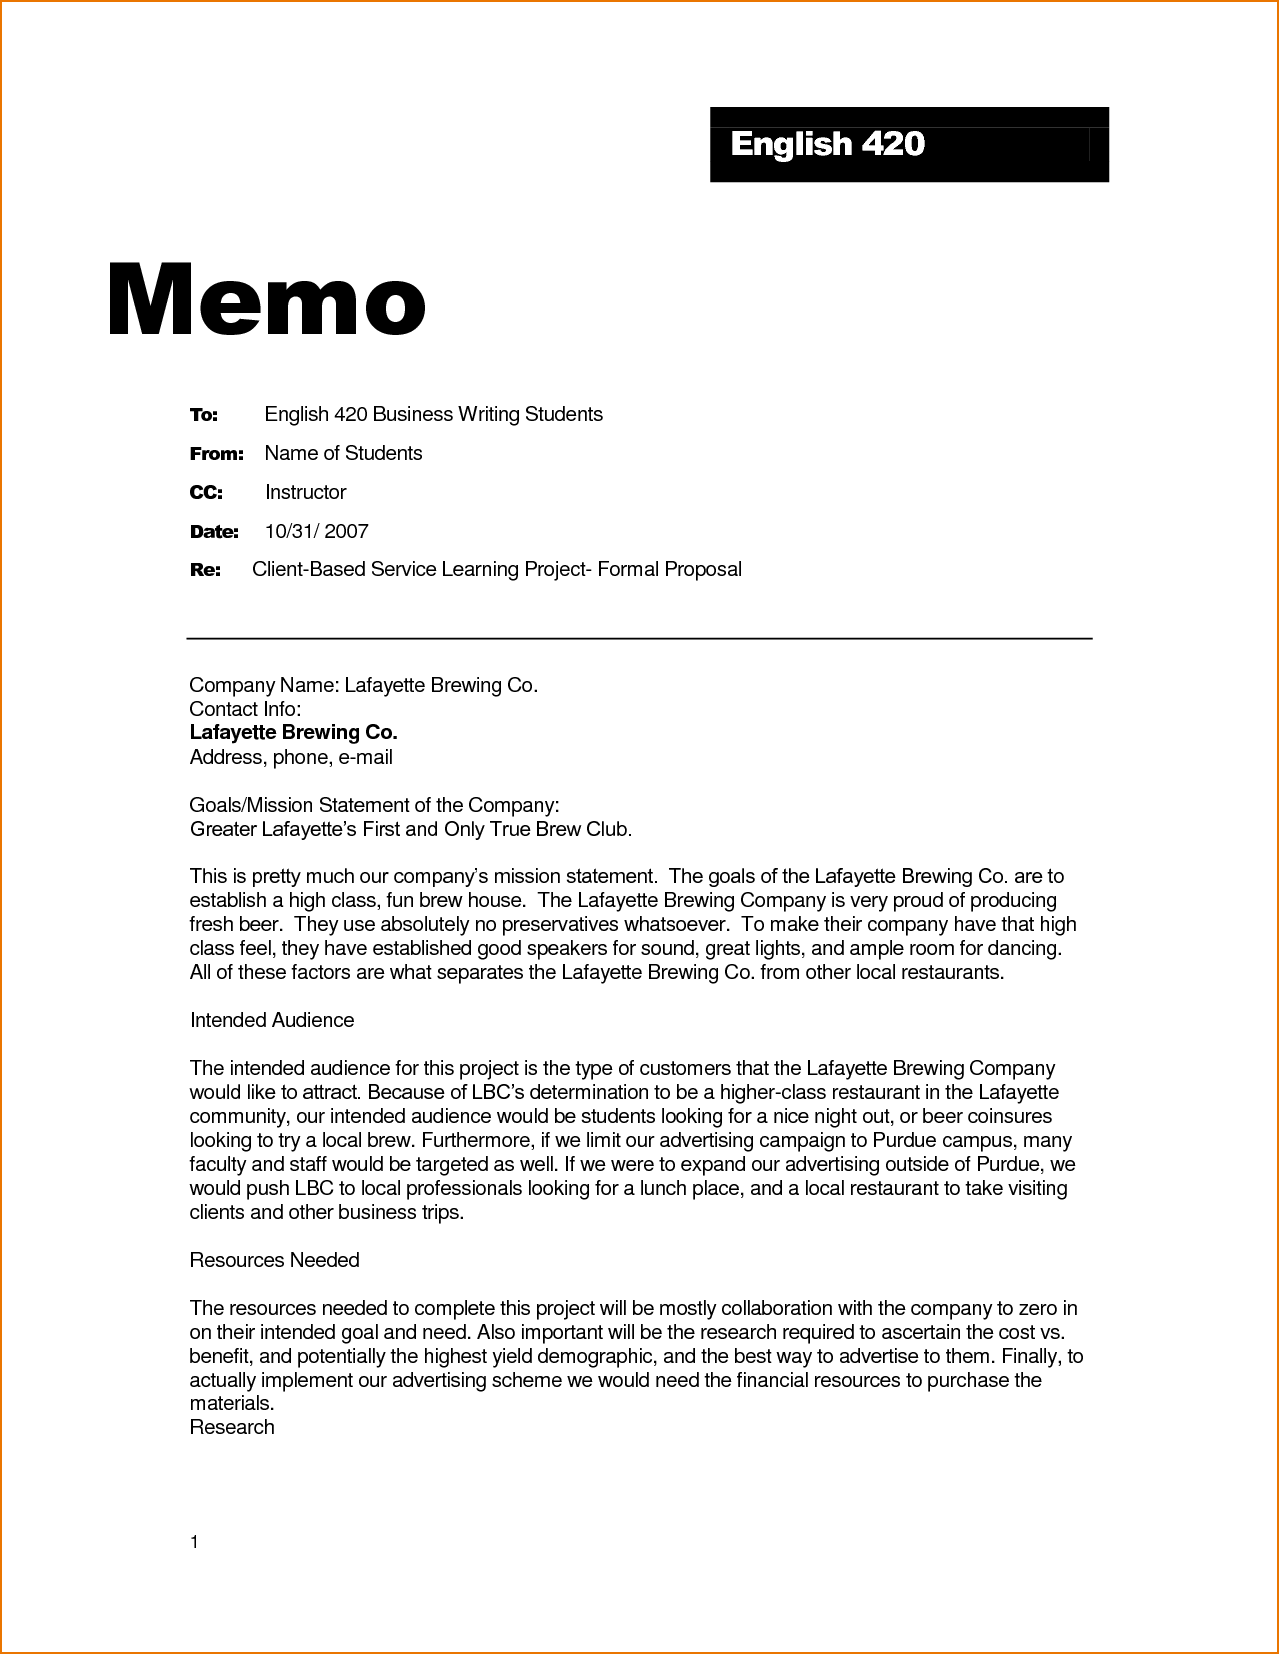 Writing company memos - How to Write a Professional Intercompany Memo